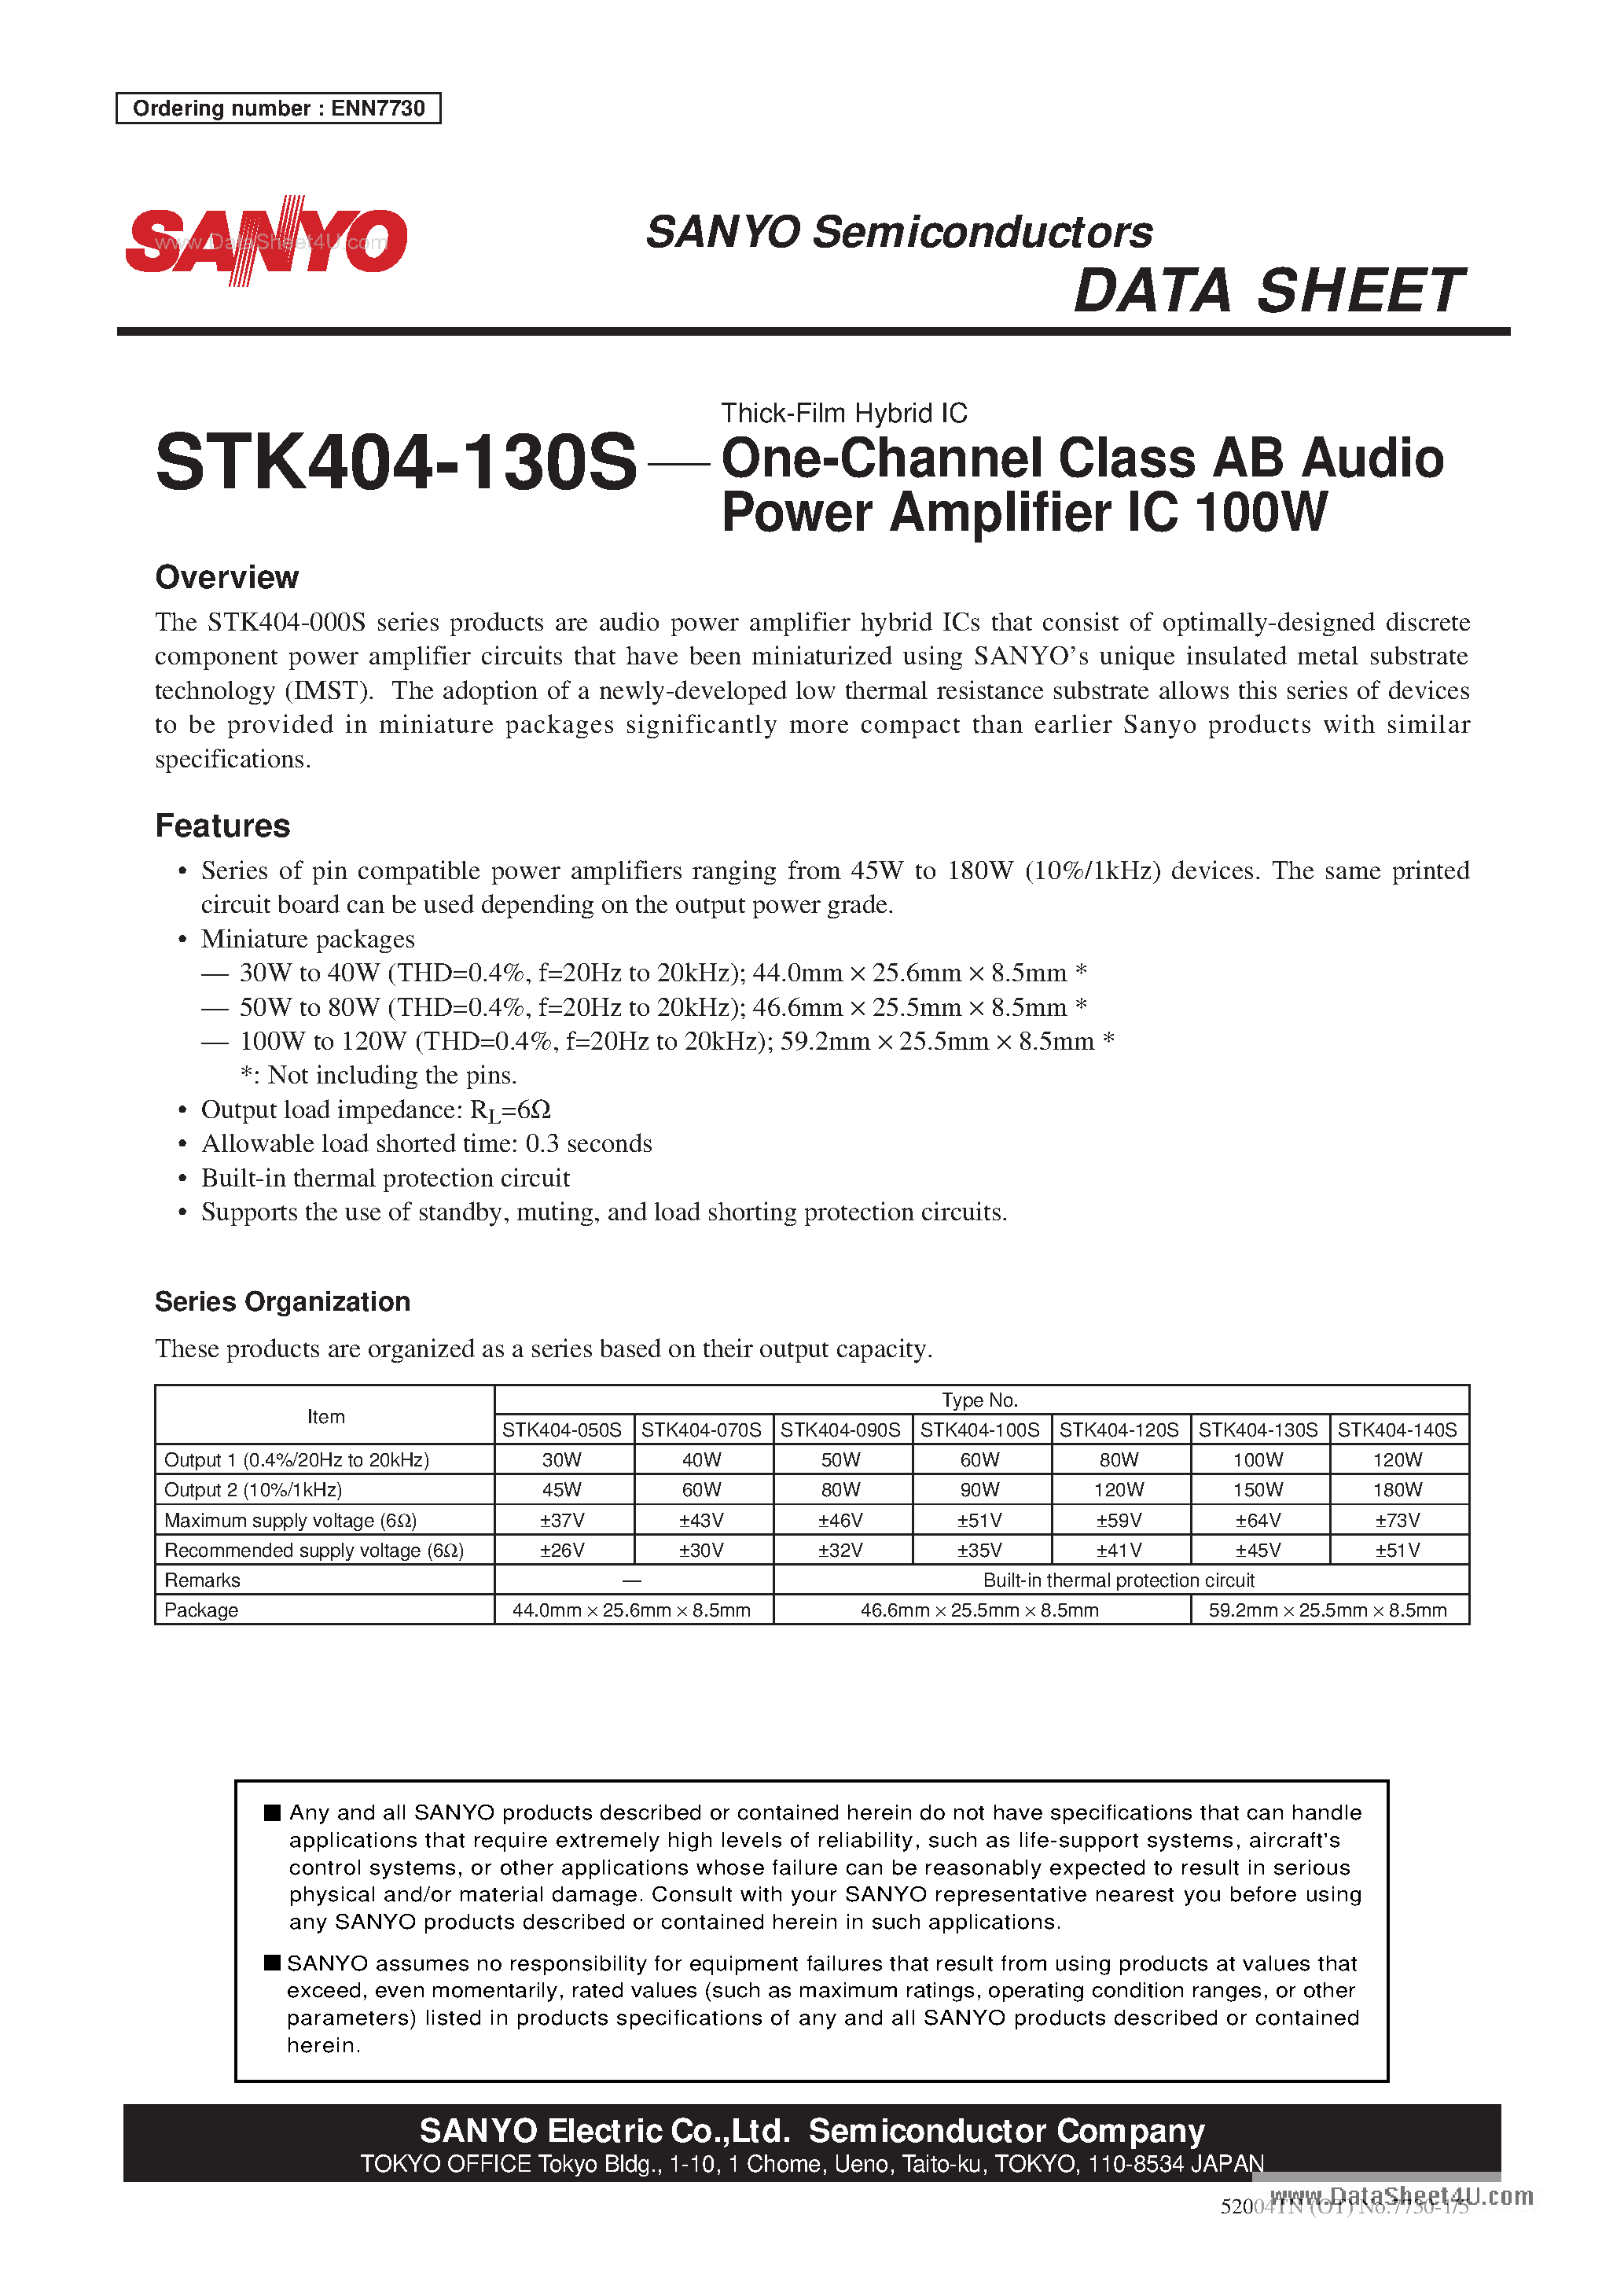 Datasheet STK404-130S - 1-Channel Class AB Audio Power Amplifier IC 100W page 1